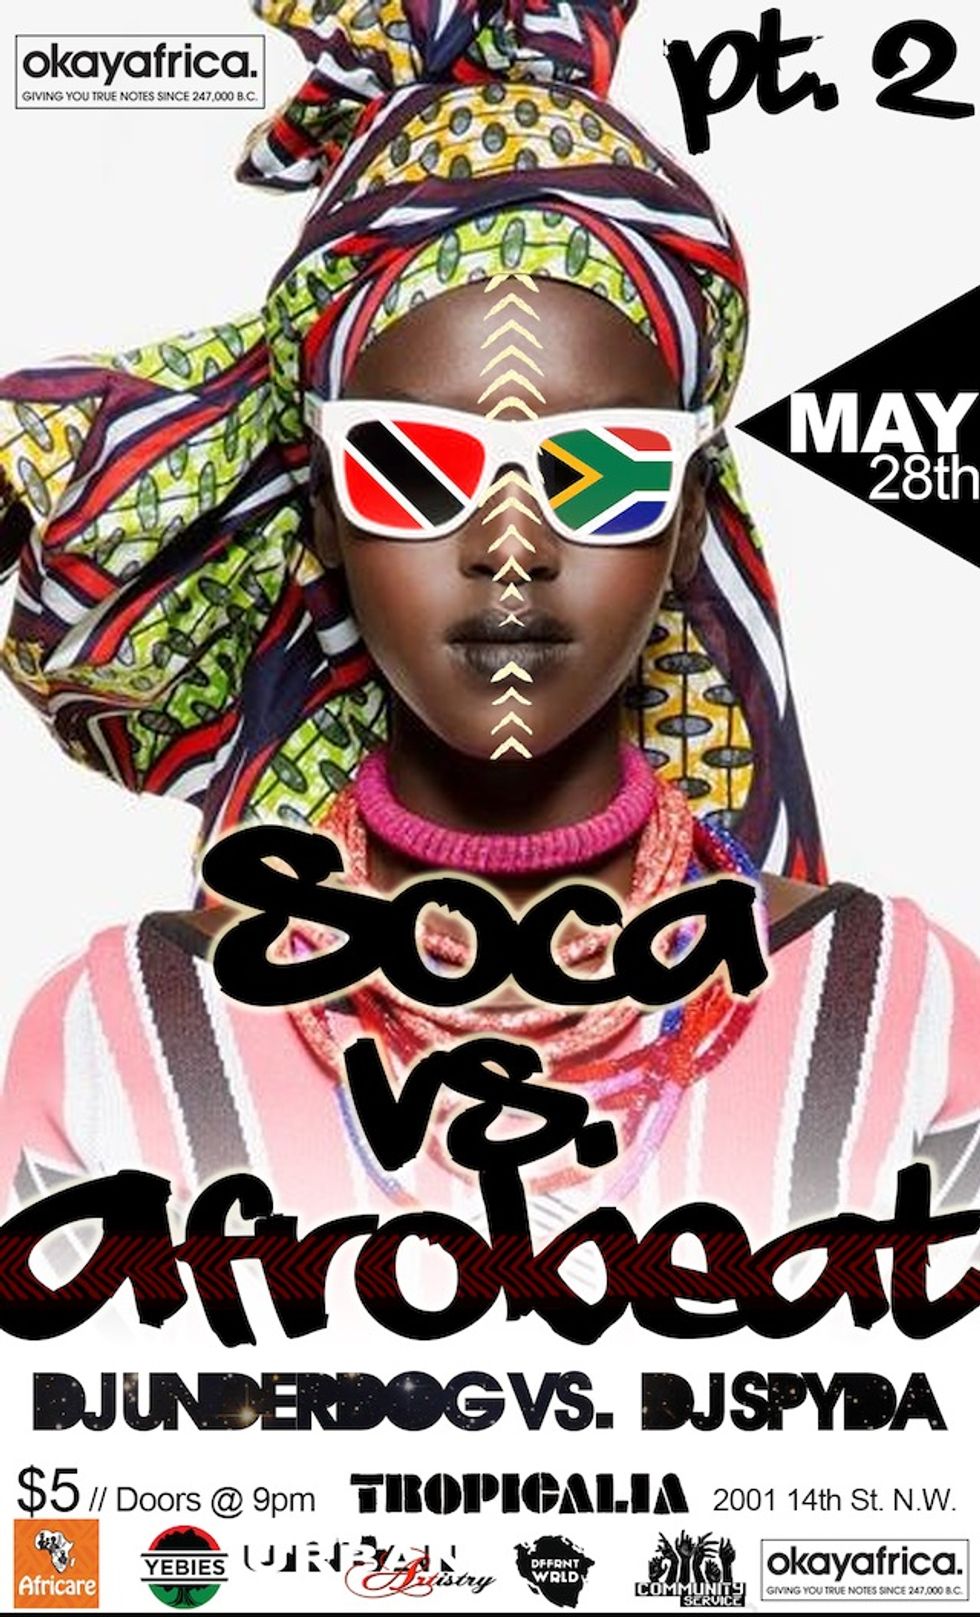 #OKAYAFRICADC Soca Vs. Afrobeat Special!